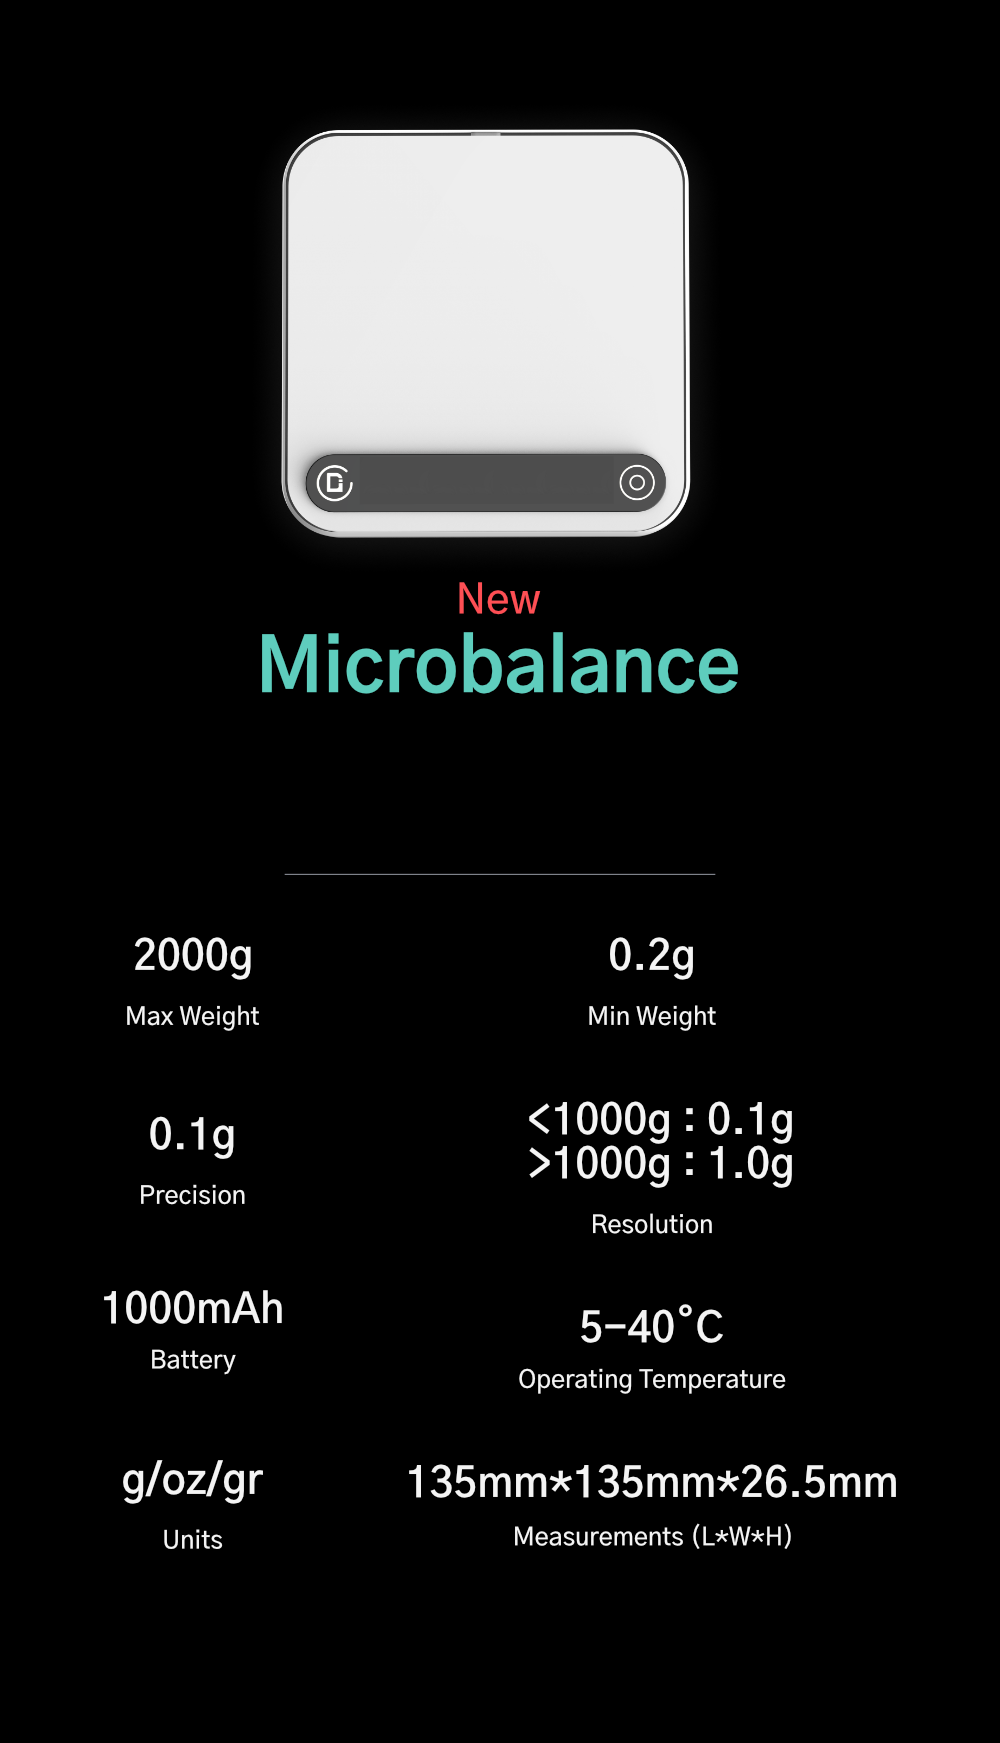 Difluid Microbalance gifted by cama_gears . #coffee #scale 